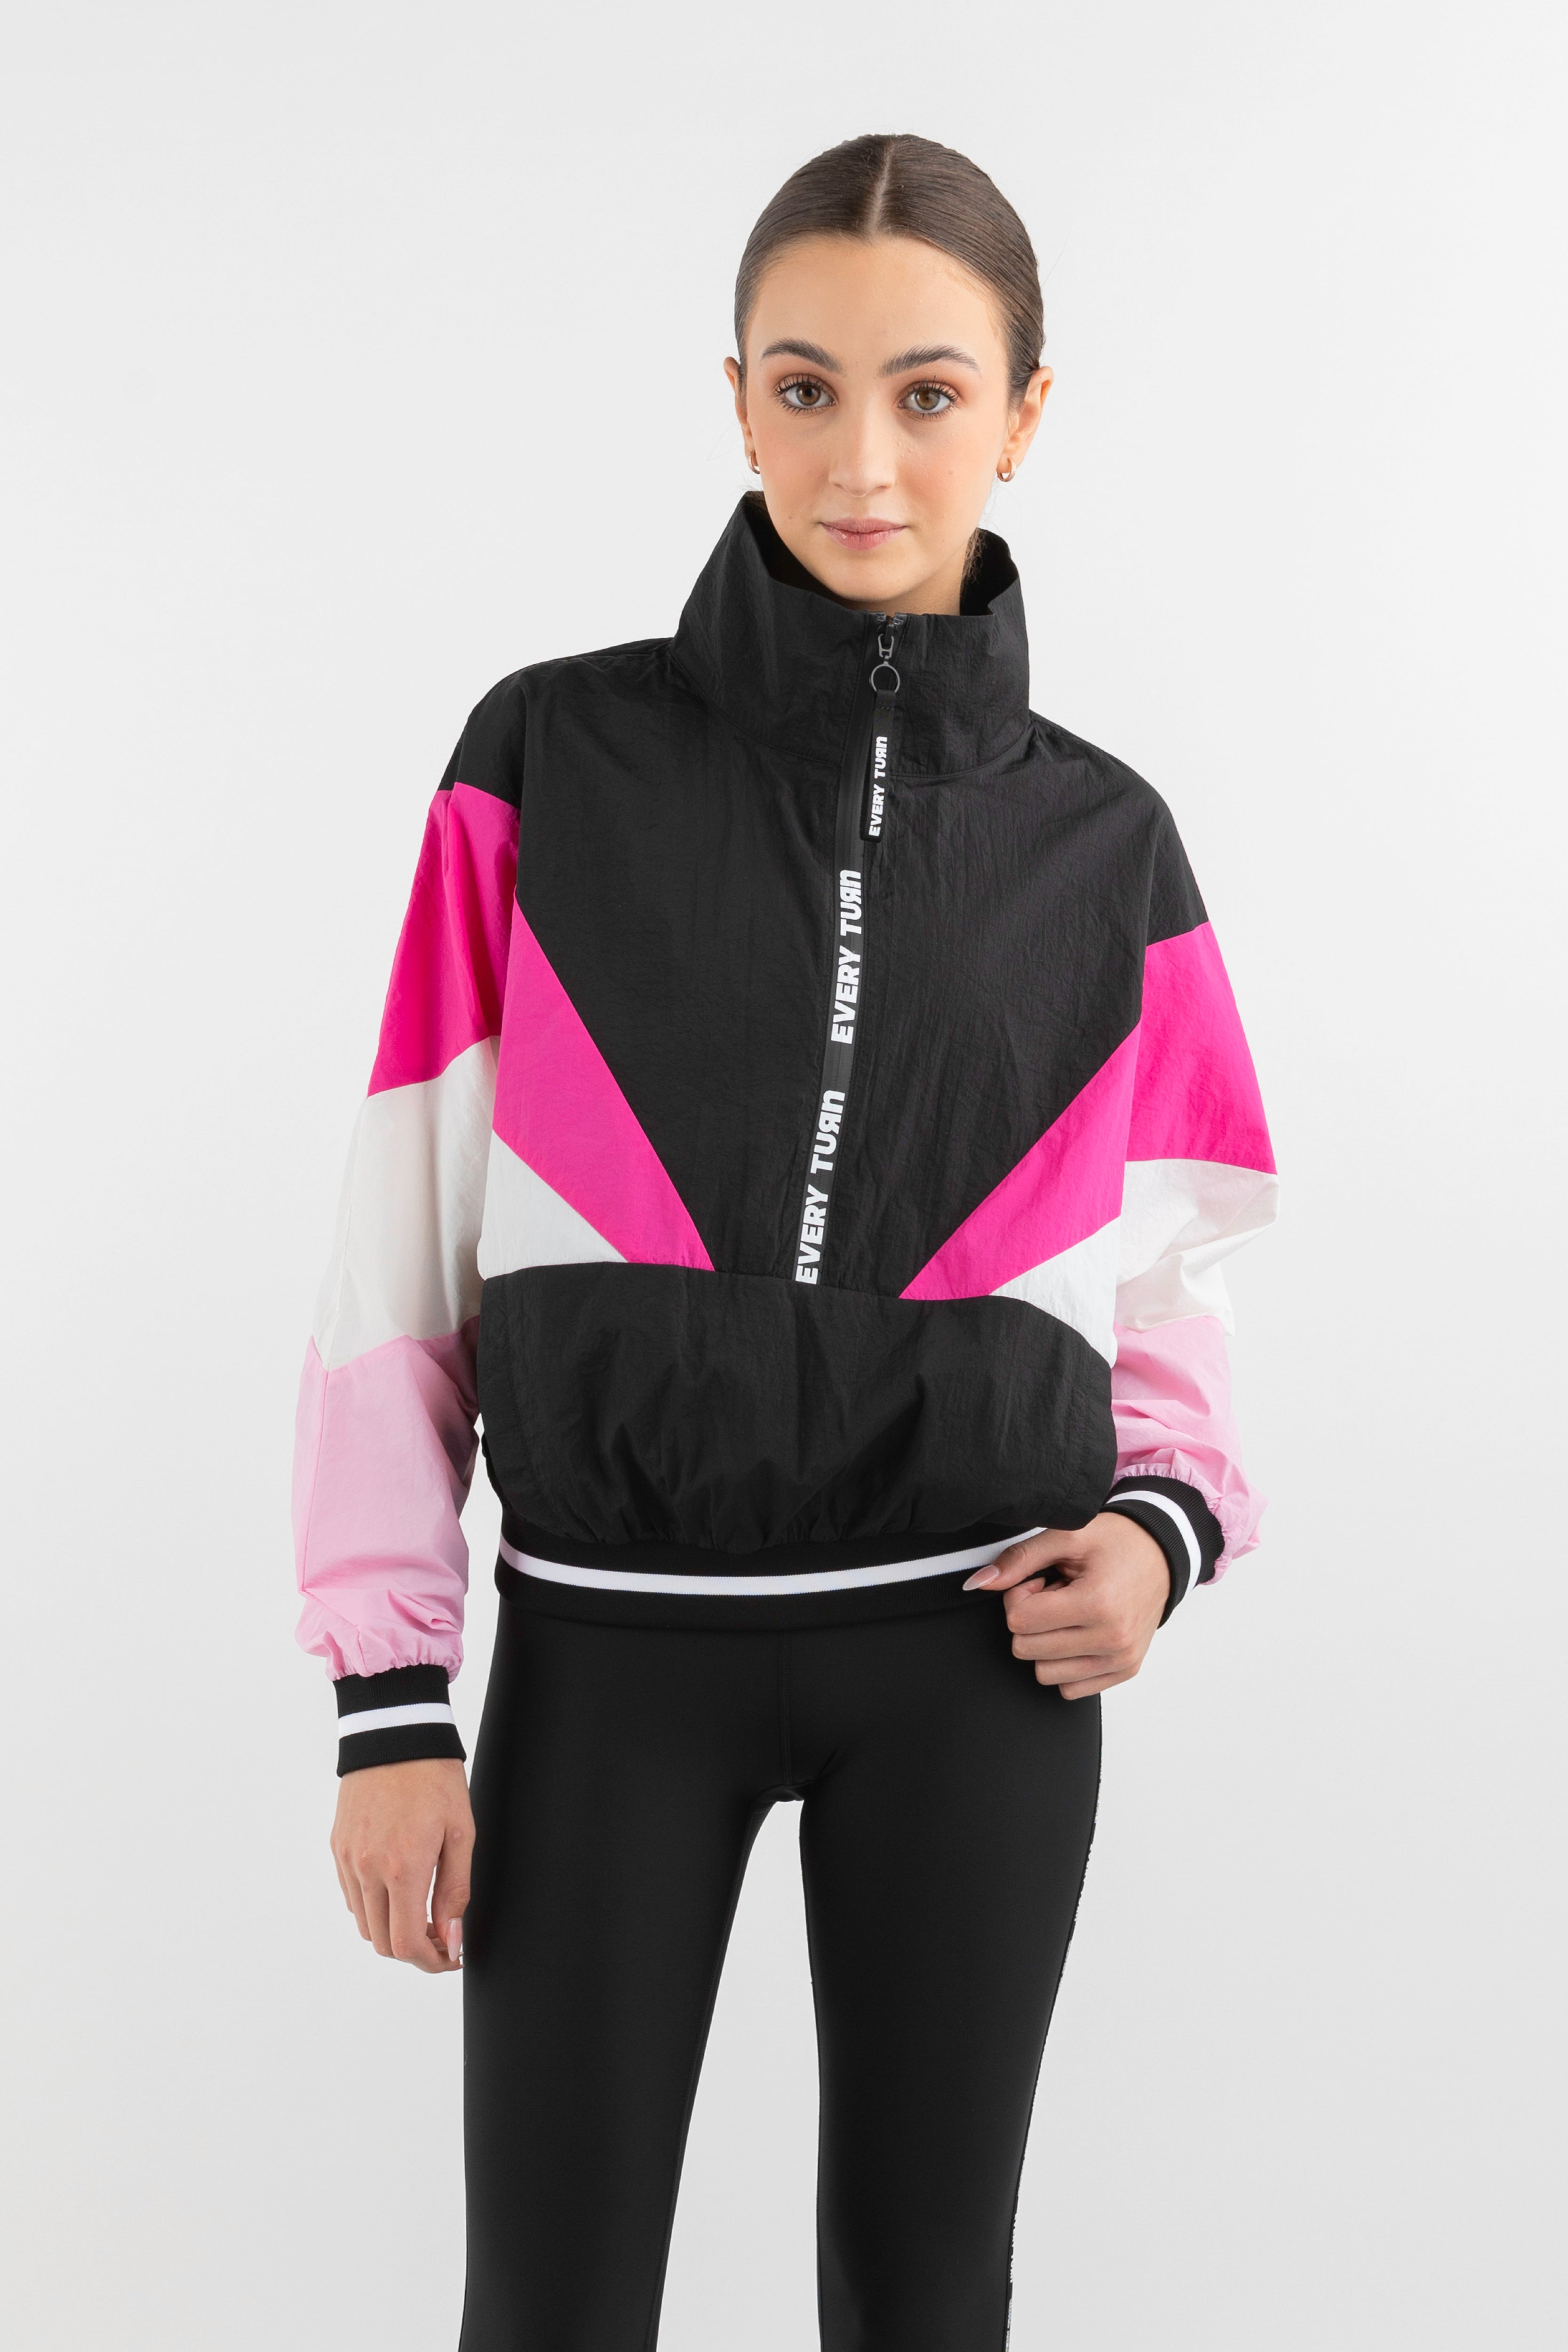 Cool Runnings Jacket | Black, Pink, White | Every Turn